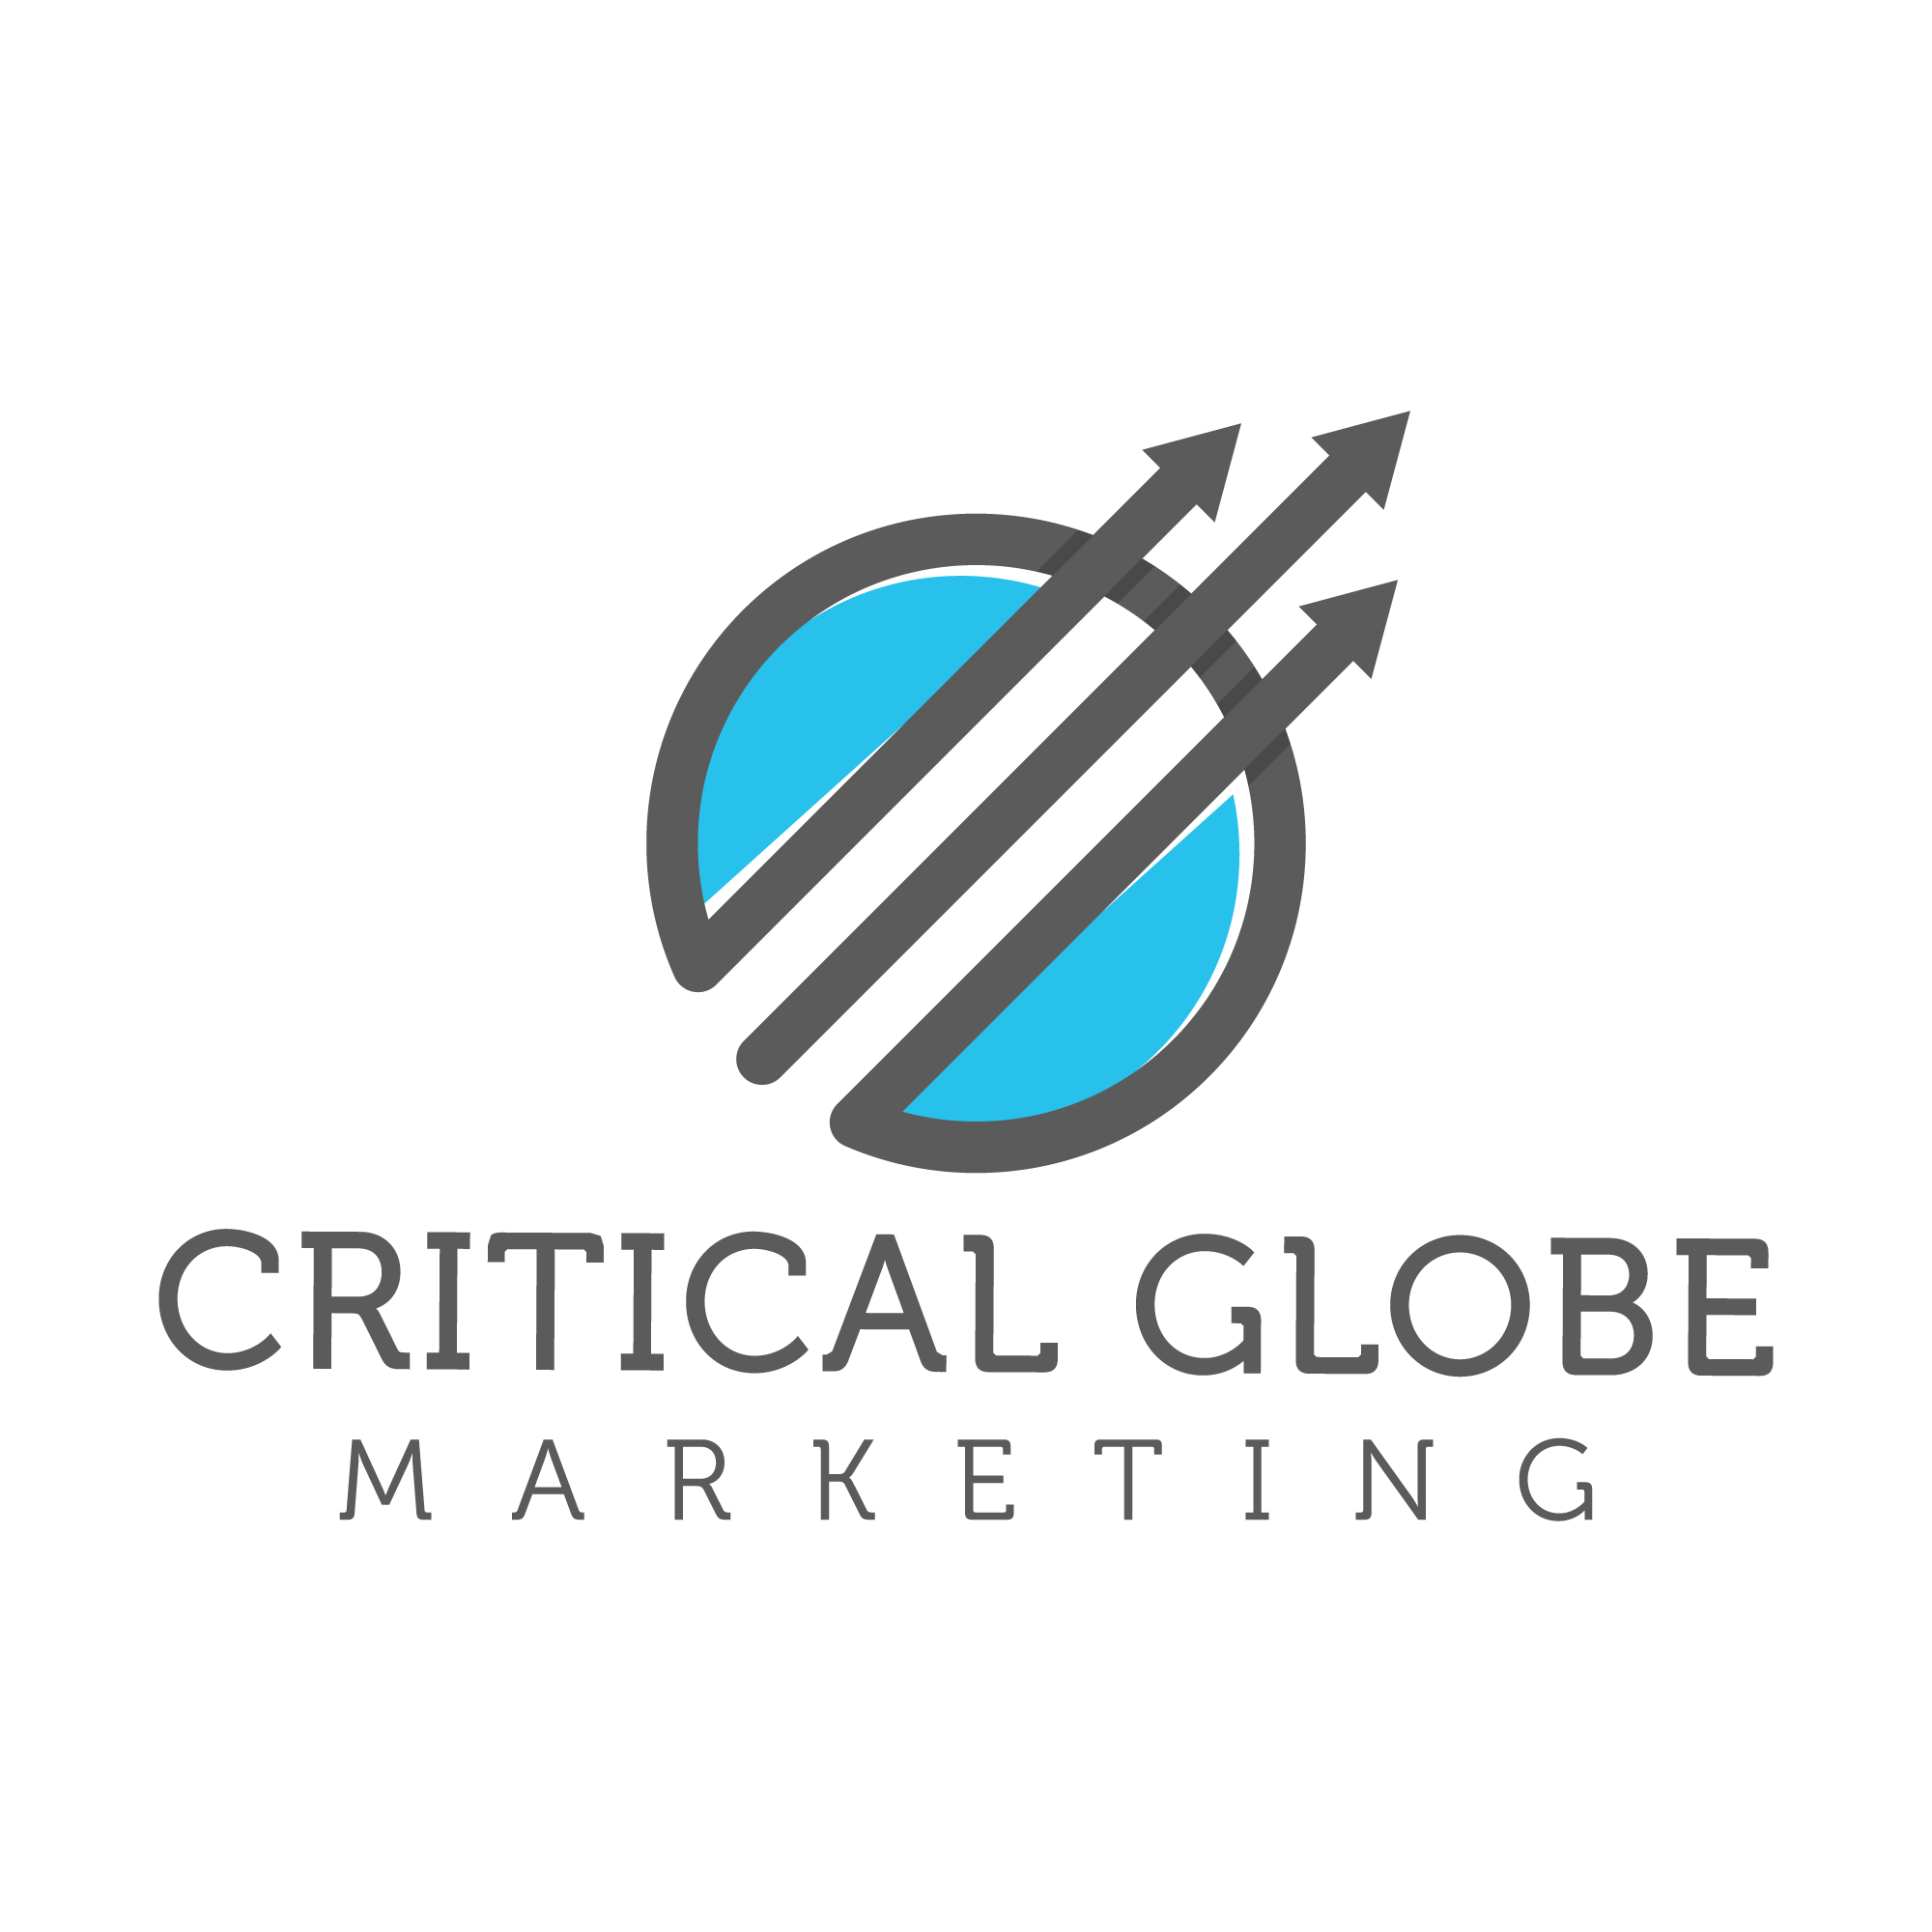 Marketing Globe Logo - Home - Critical Globe Marketing